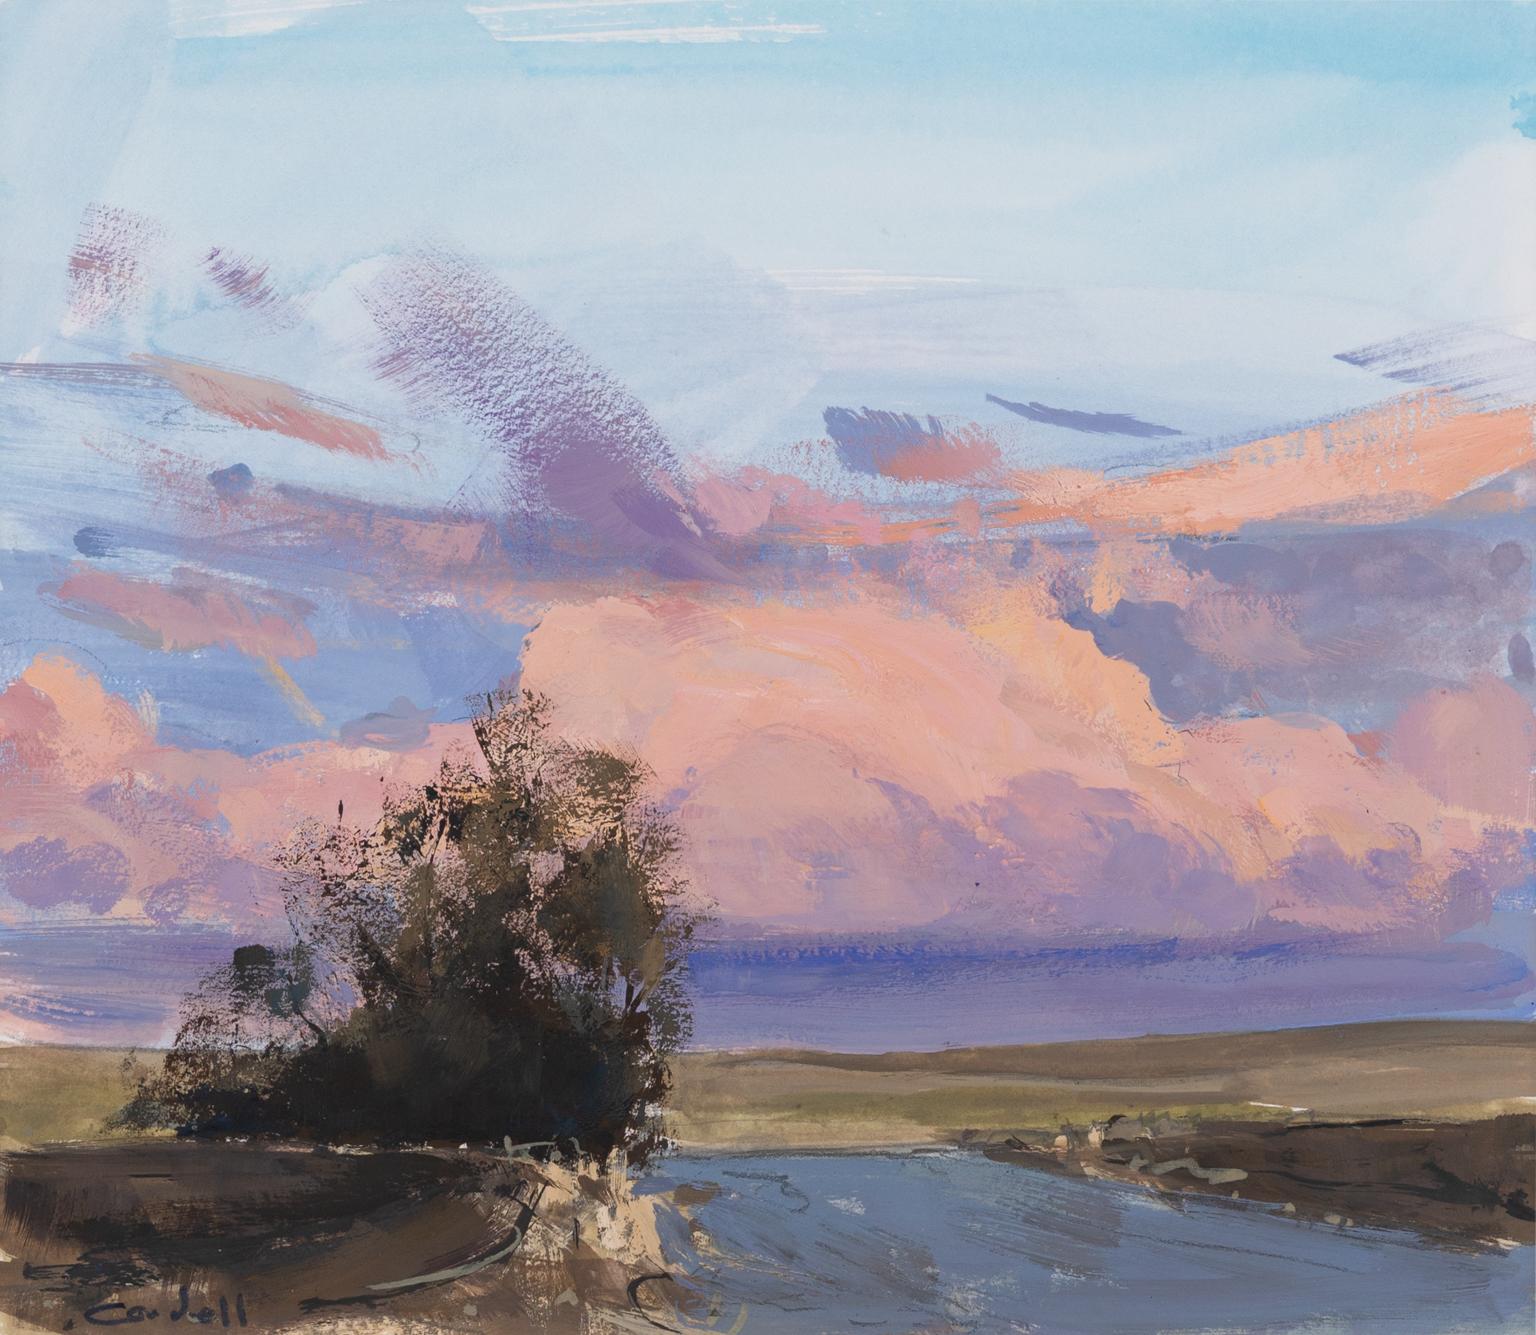 Cloud - Plein Air Gouache Landscape Painting during Sunset of Grassy Hills